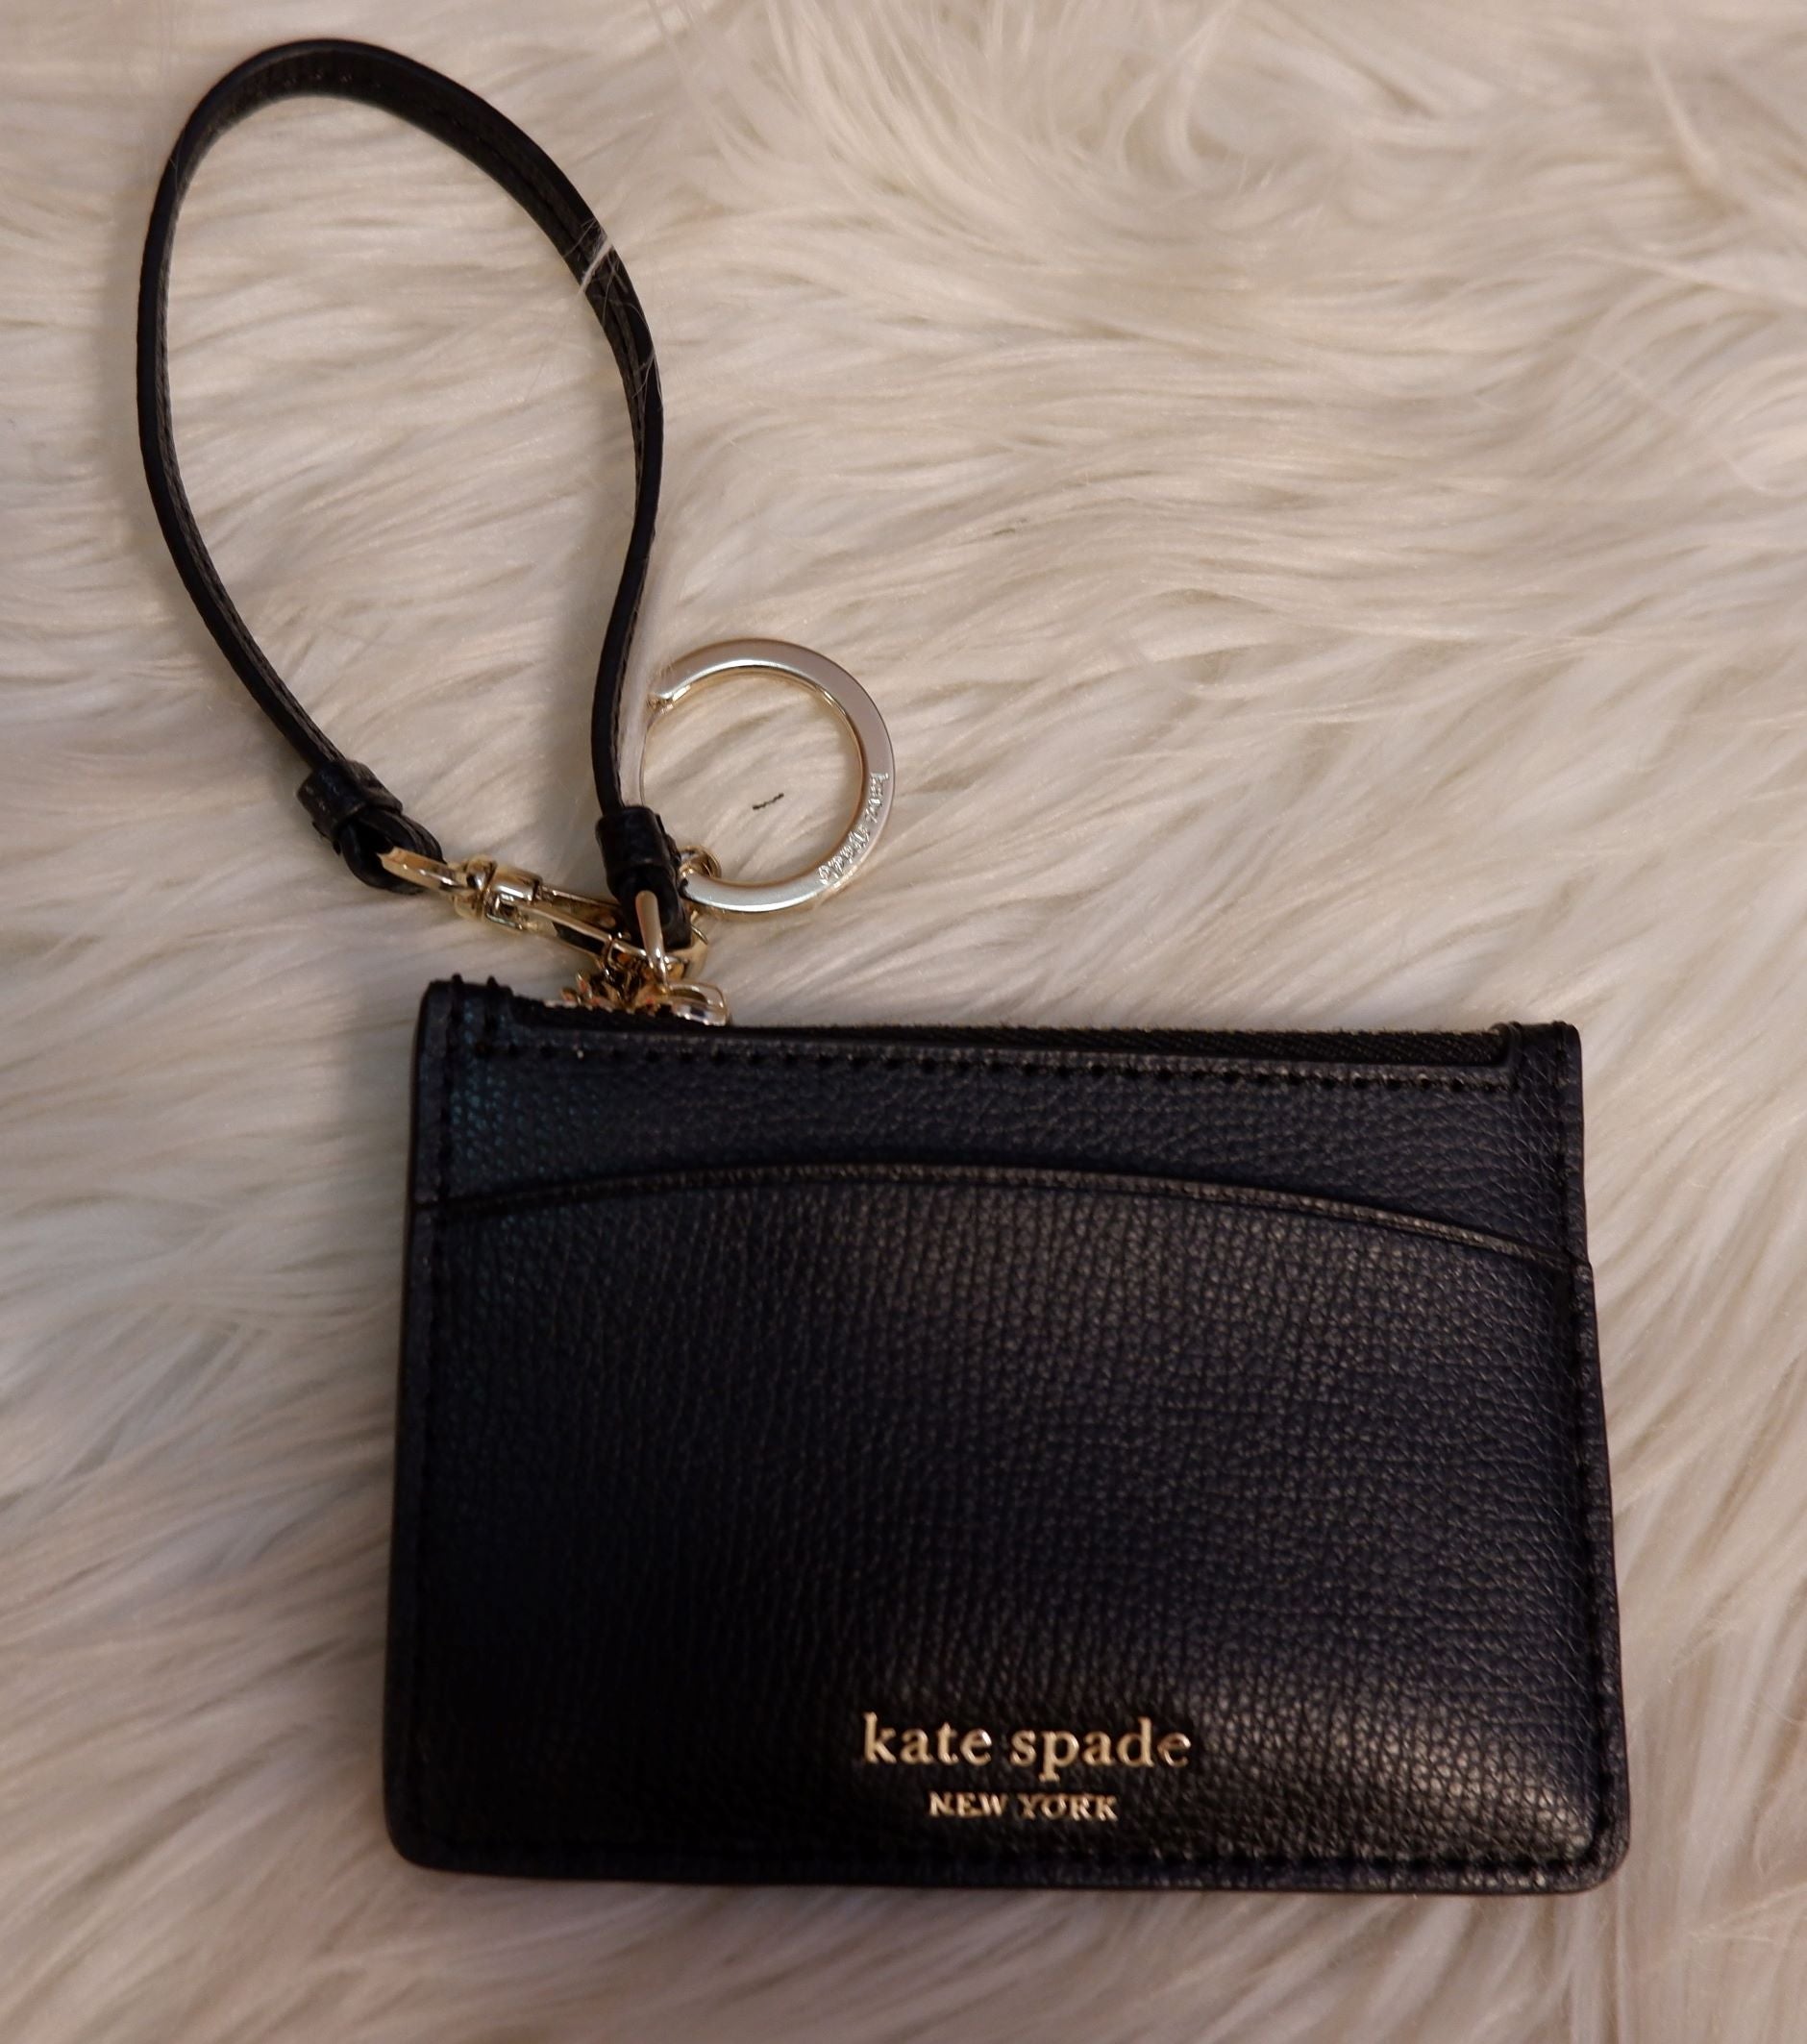 Kate Spade New York Women's Cardholder Wristlet in Black